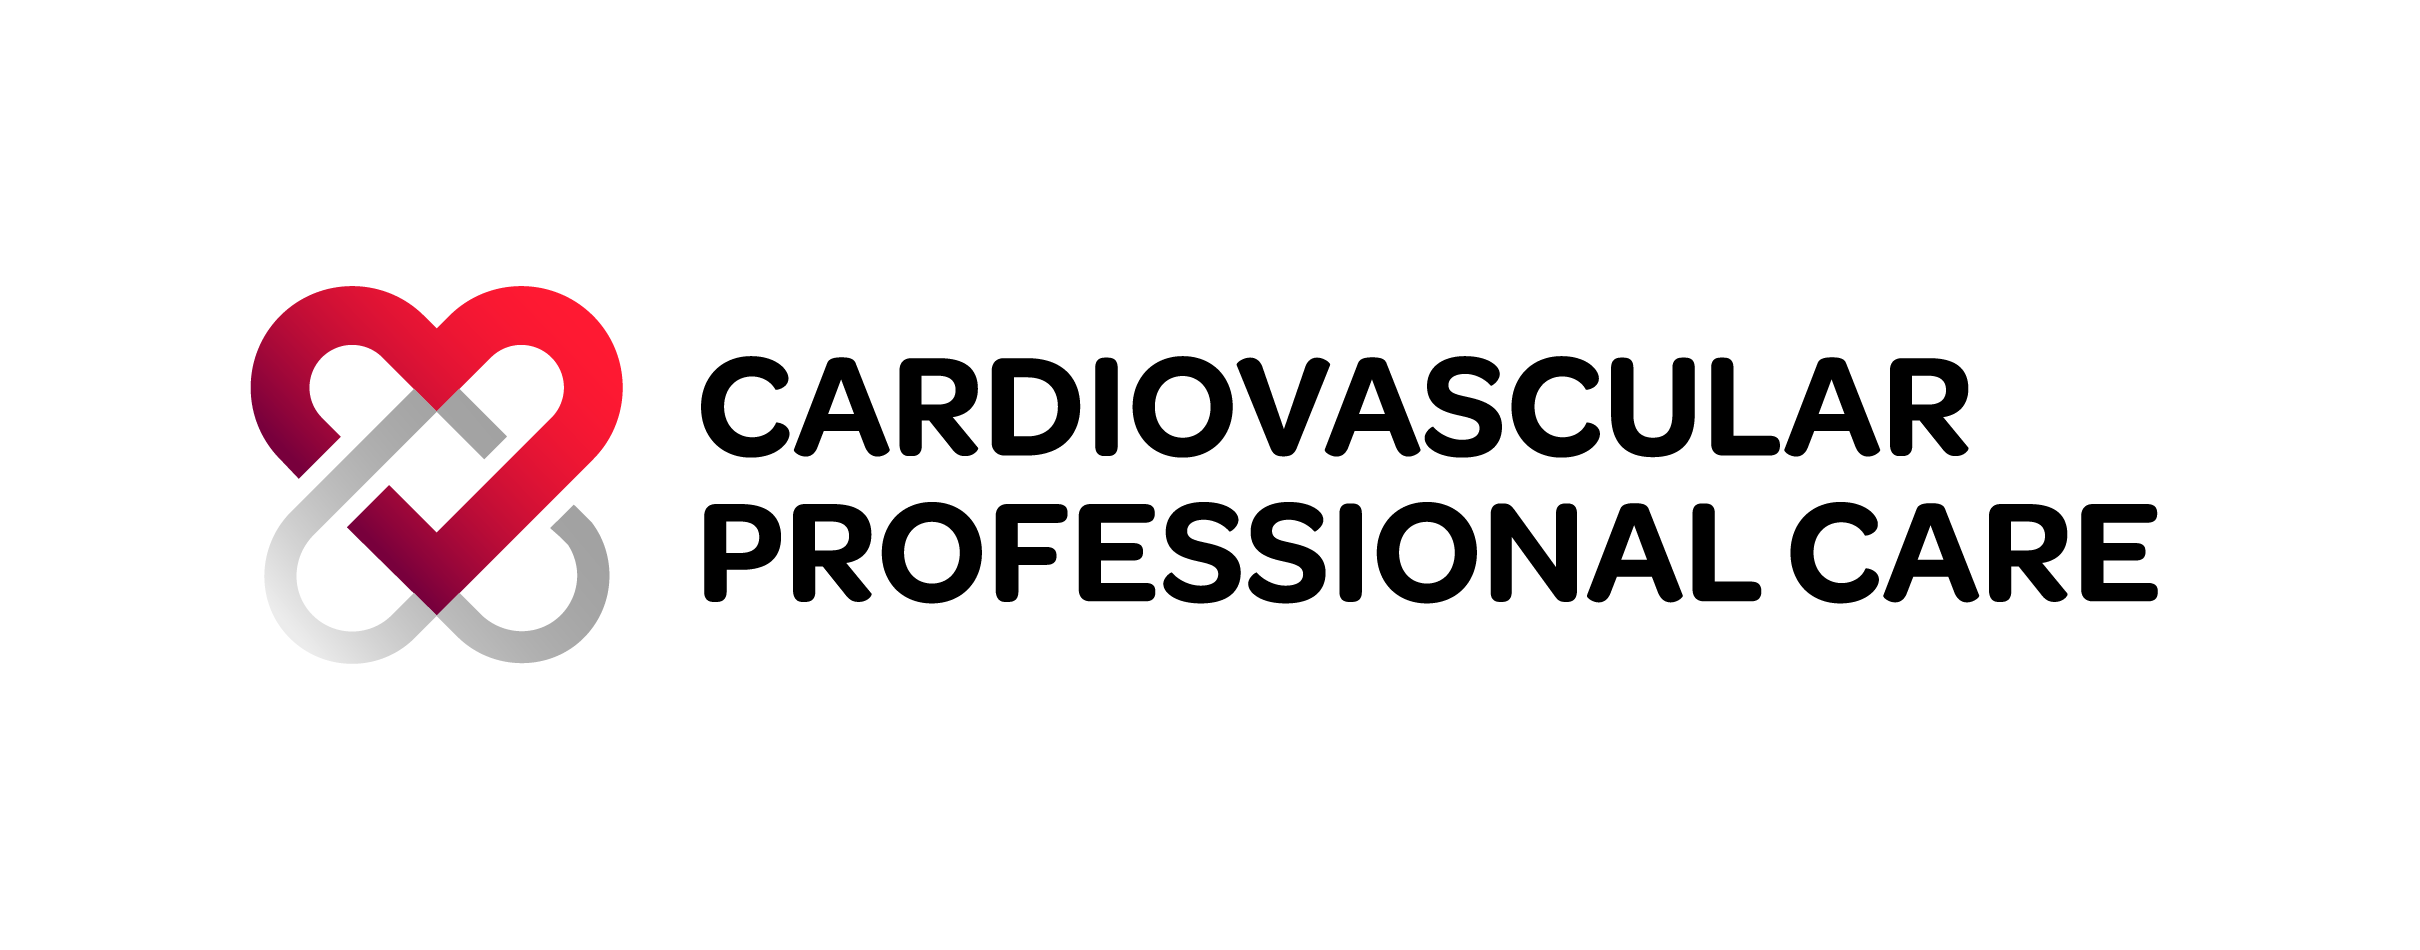 Cardiovascular Professional Care